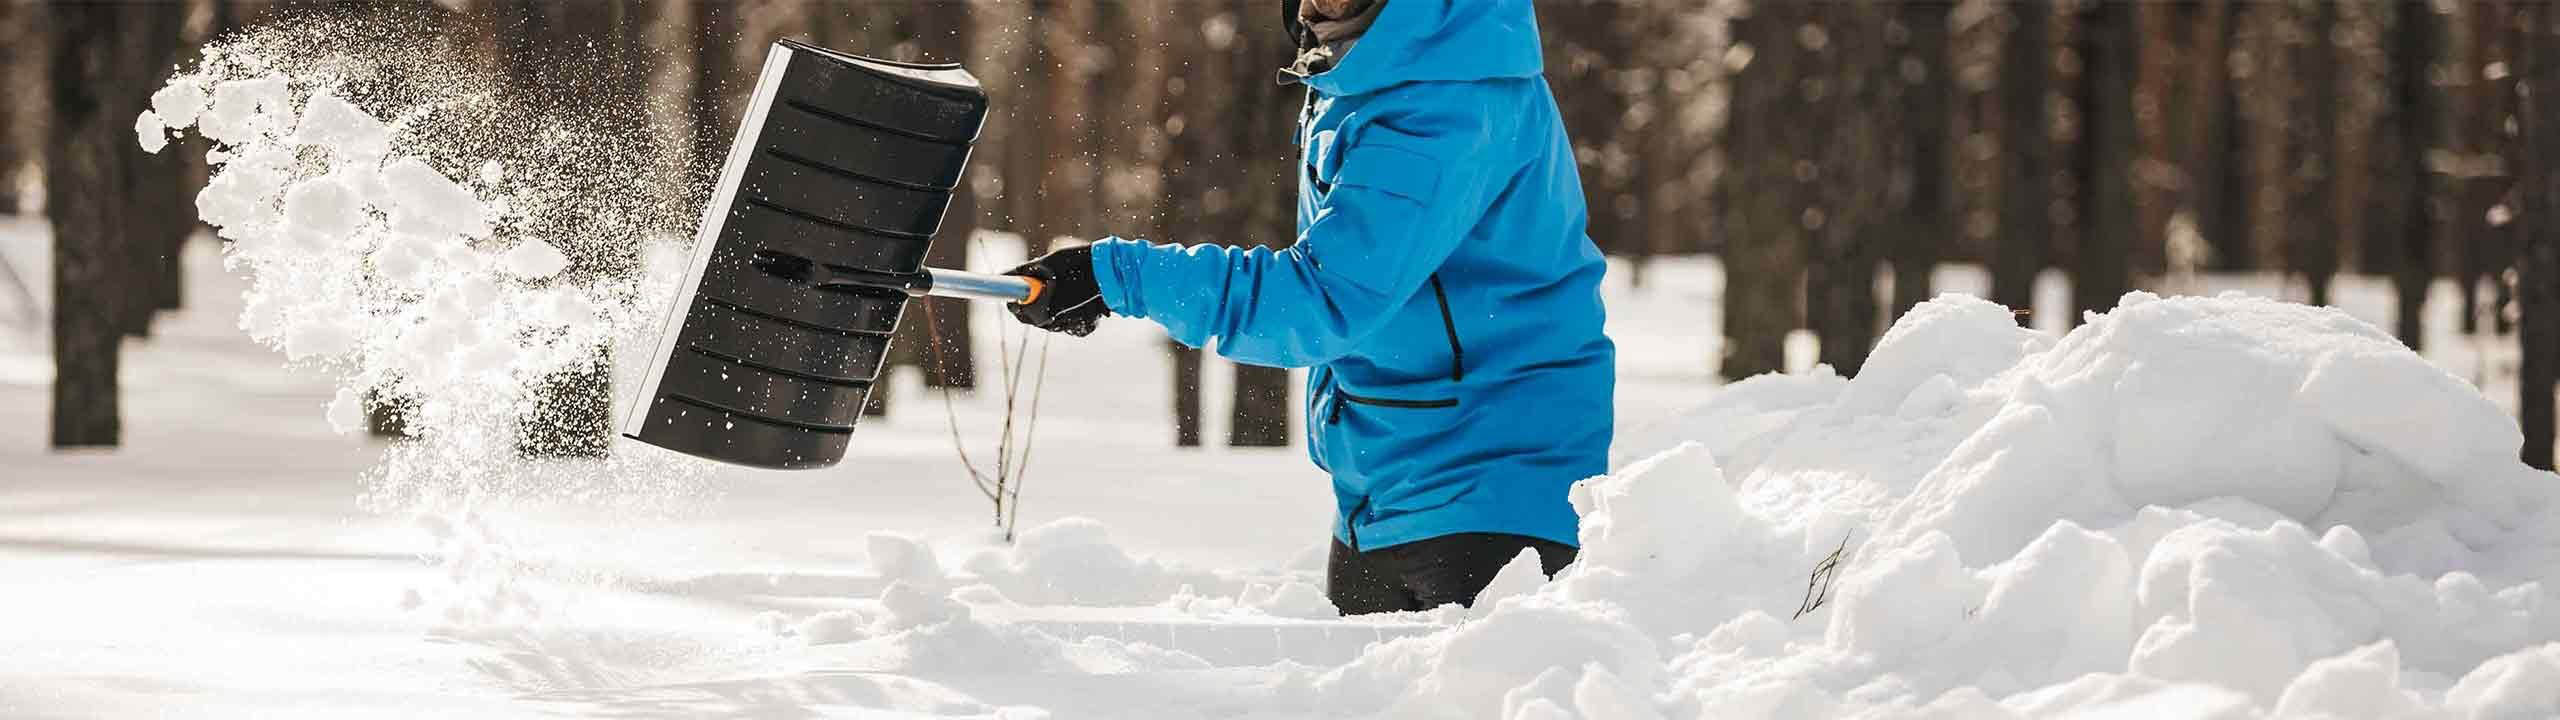 Herramientas para la nieve Fiskars en Taller Valero